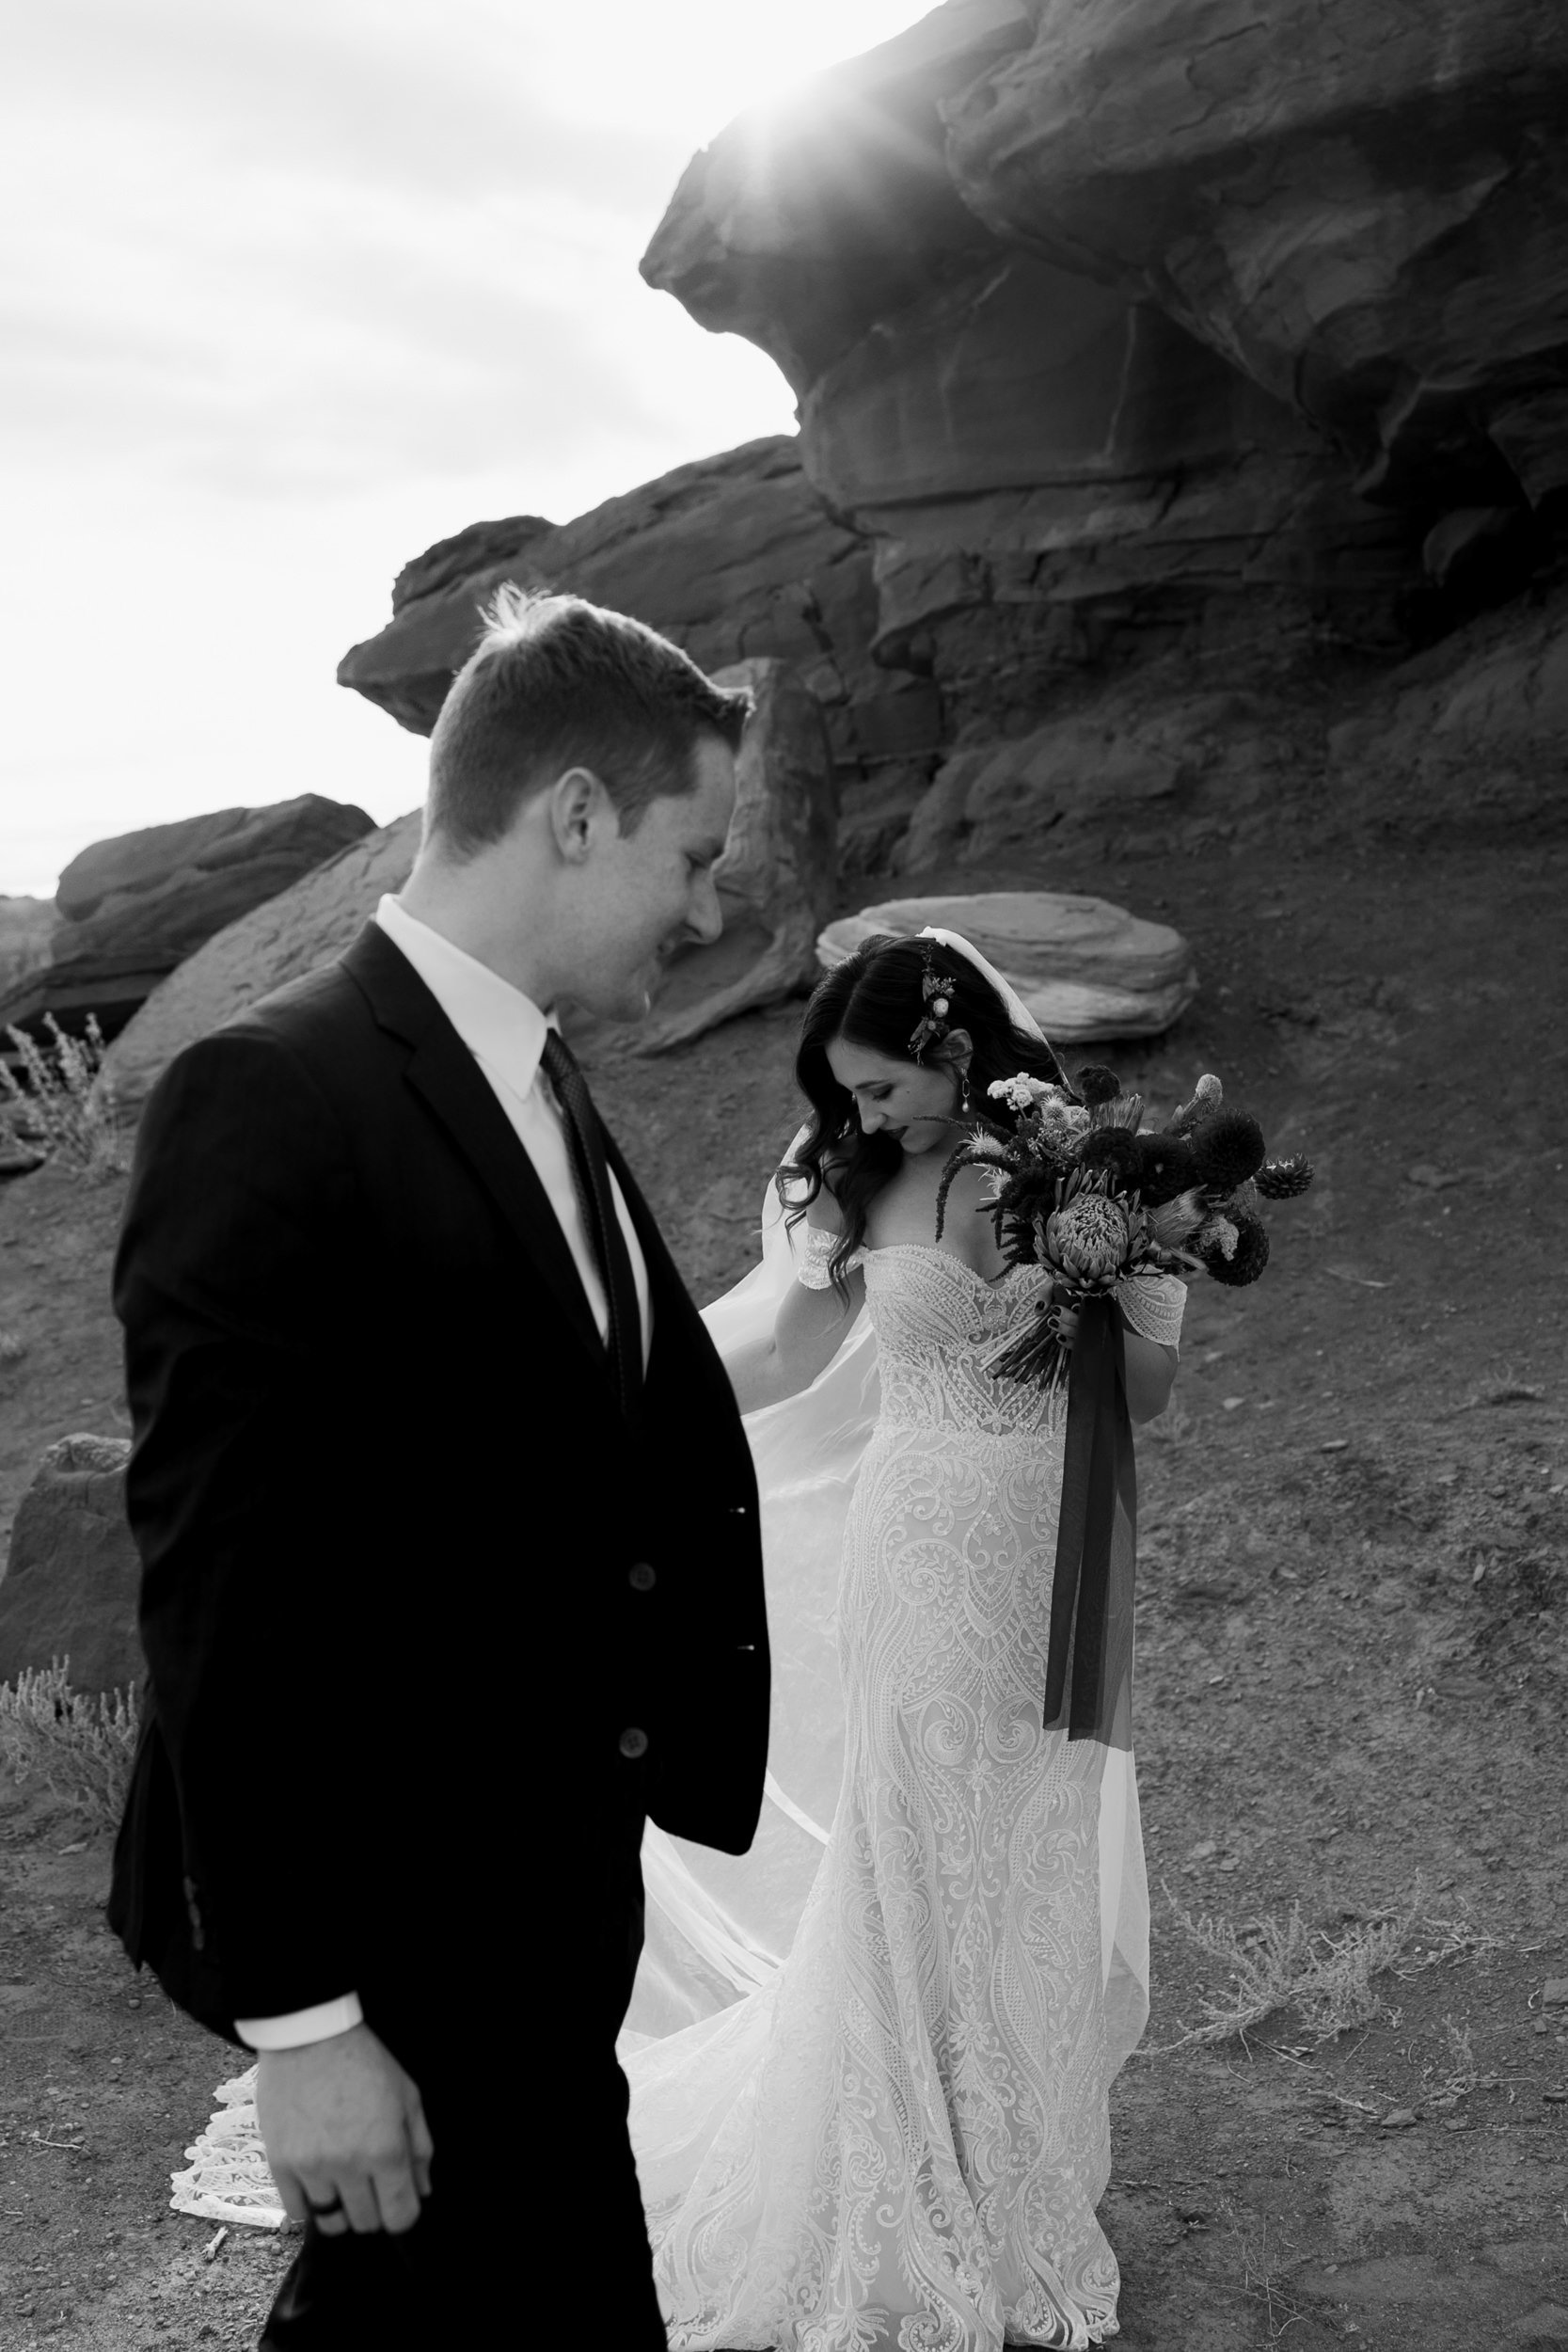 Utah Desert Elopement Photography in Moab, Utah | The Hearnes Adventure Weddings